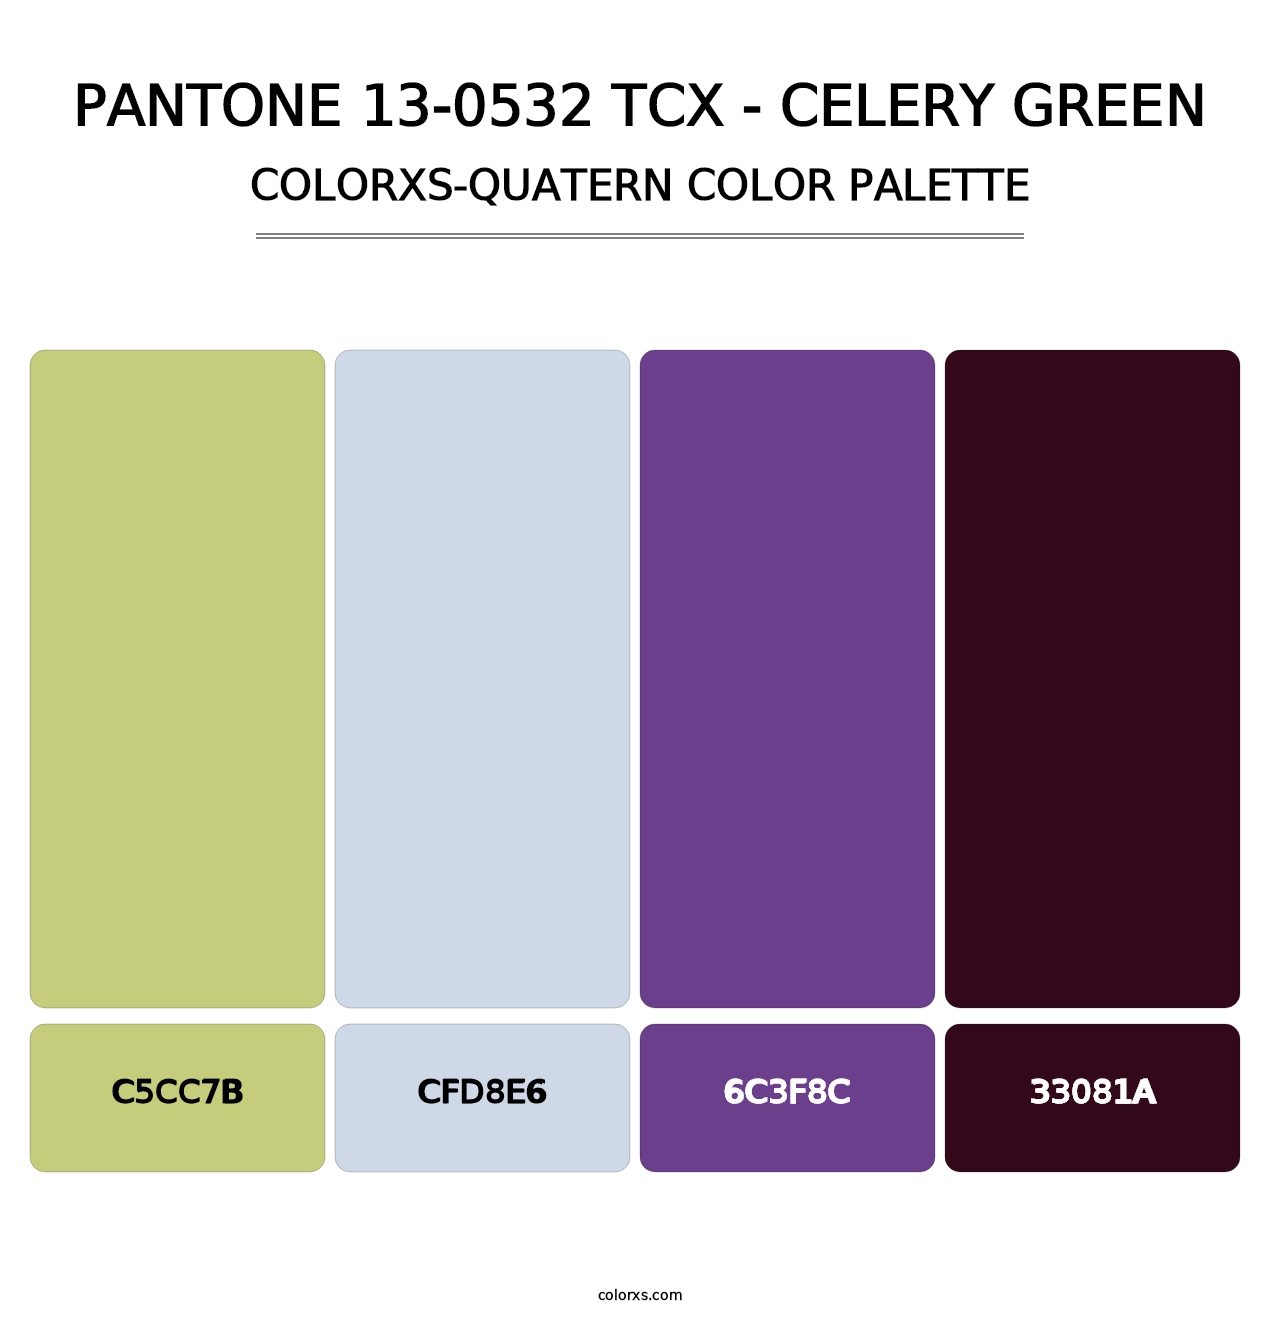 PANTONE 13-0532 TCX - Celery Green - Colorxs Quatern Palette